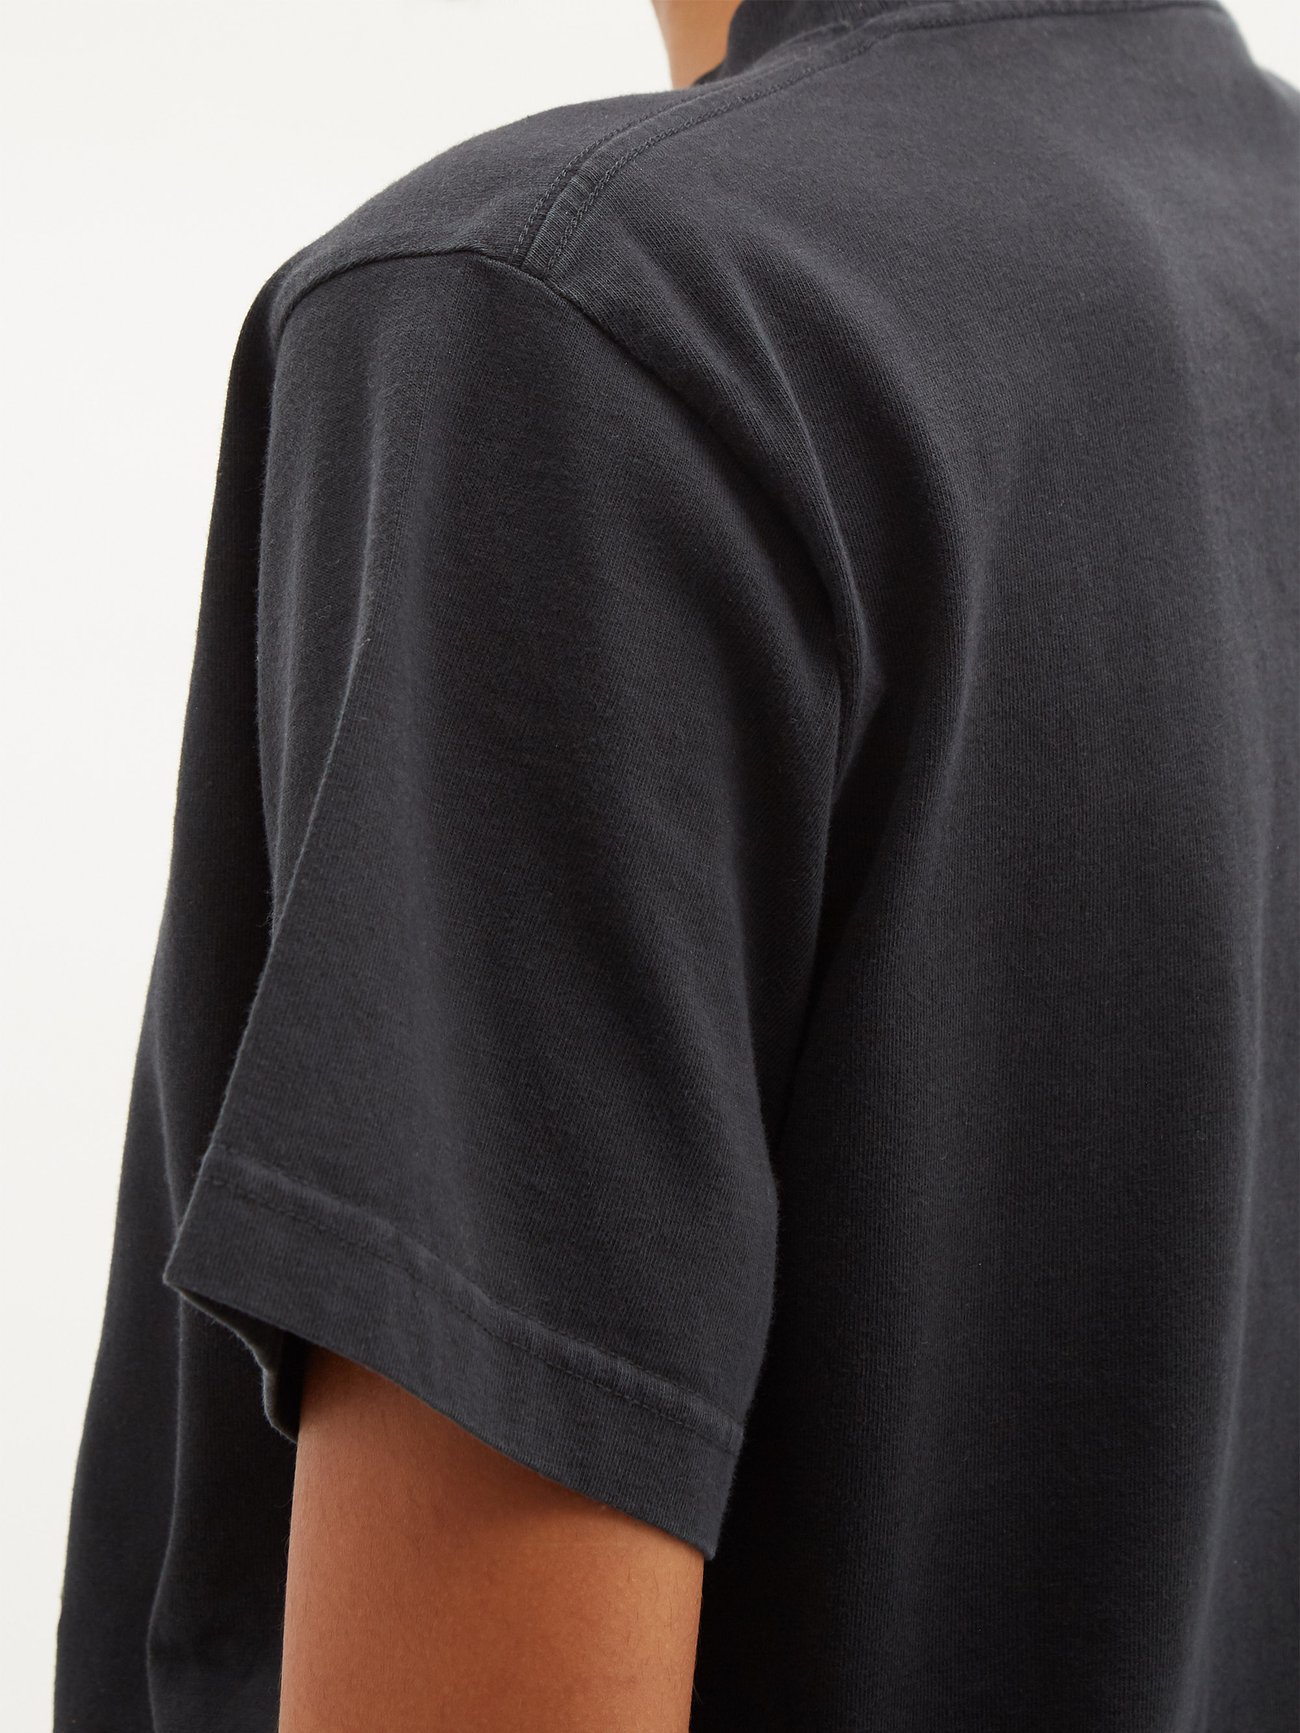 Black Year of the Tiger-print cotton-jersey T-shirt, Balenciaga